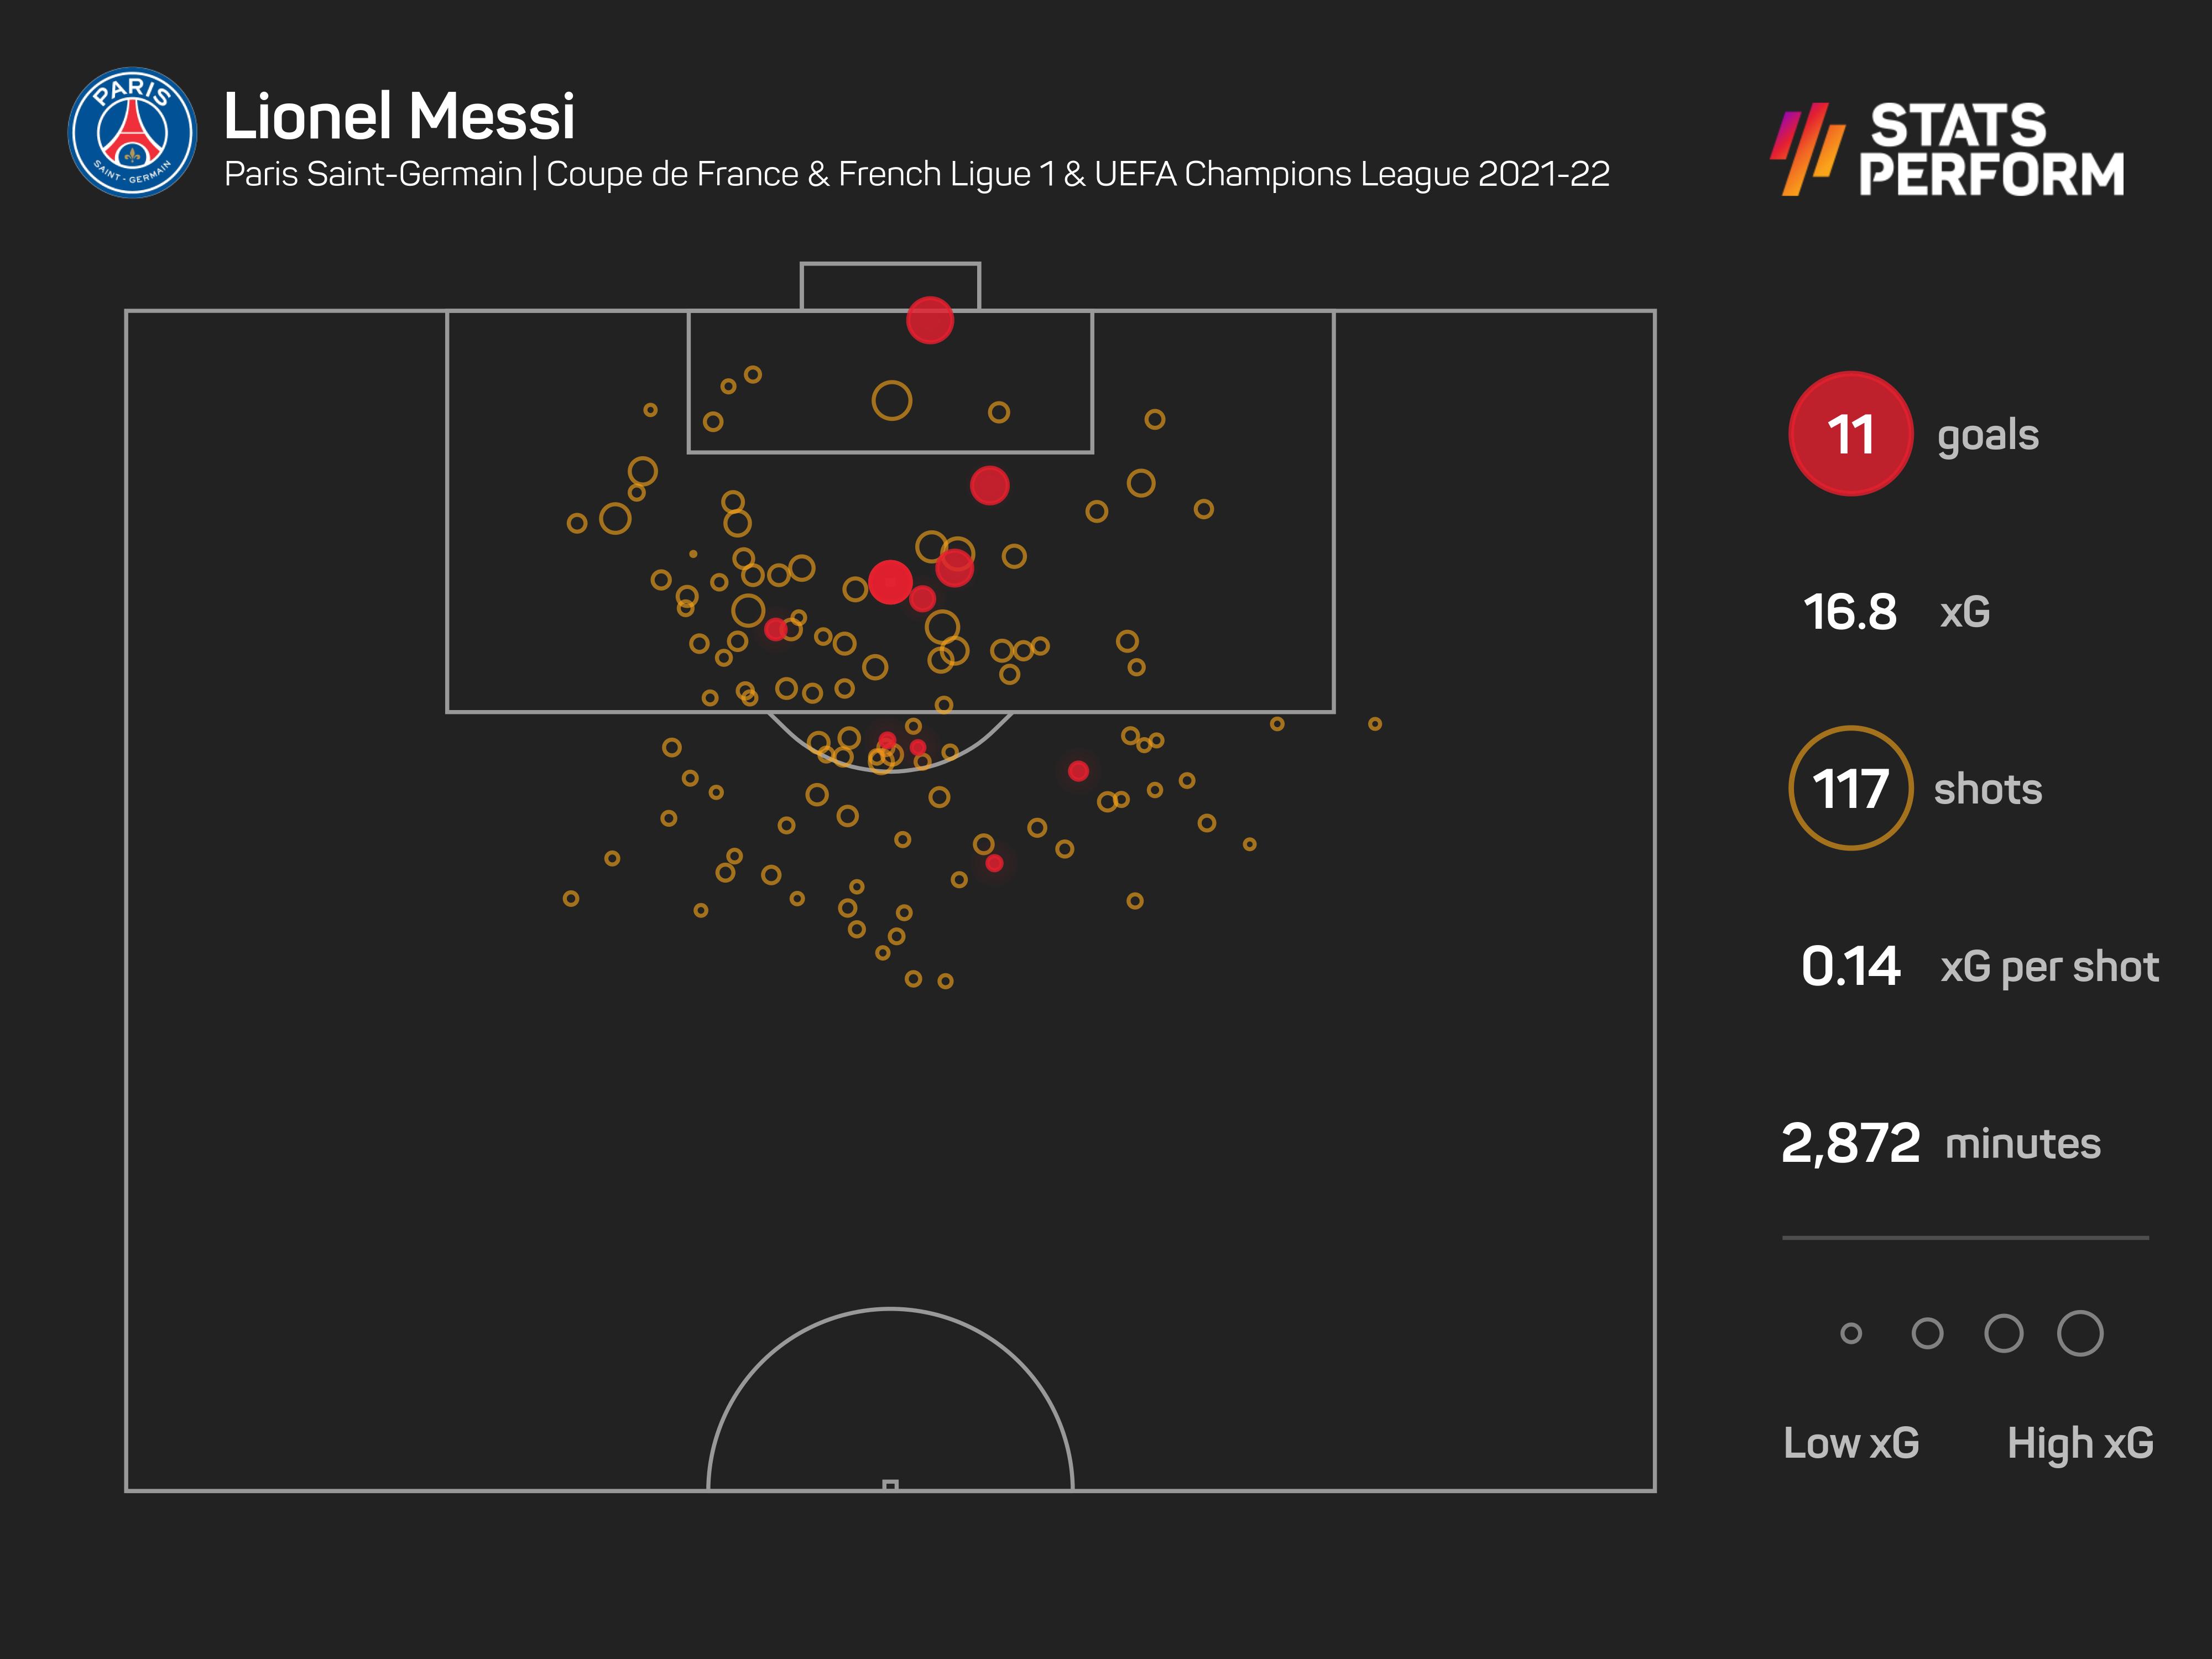 Messi scored 11 goals last season